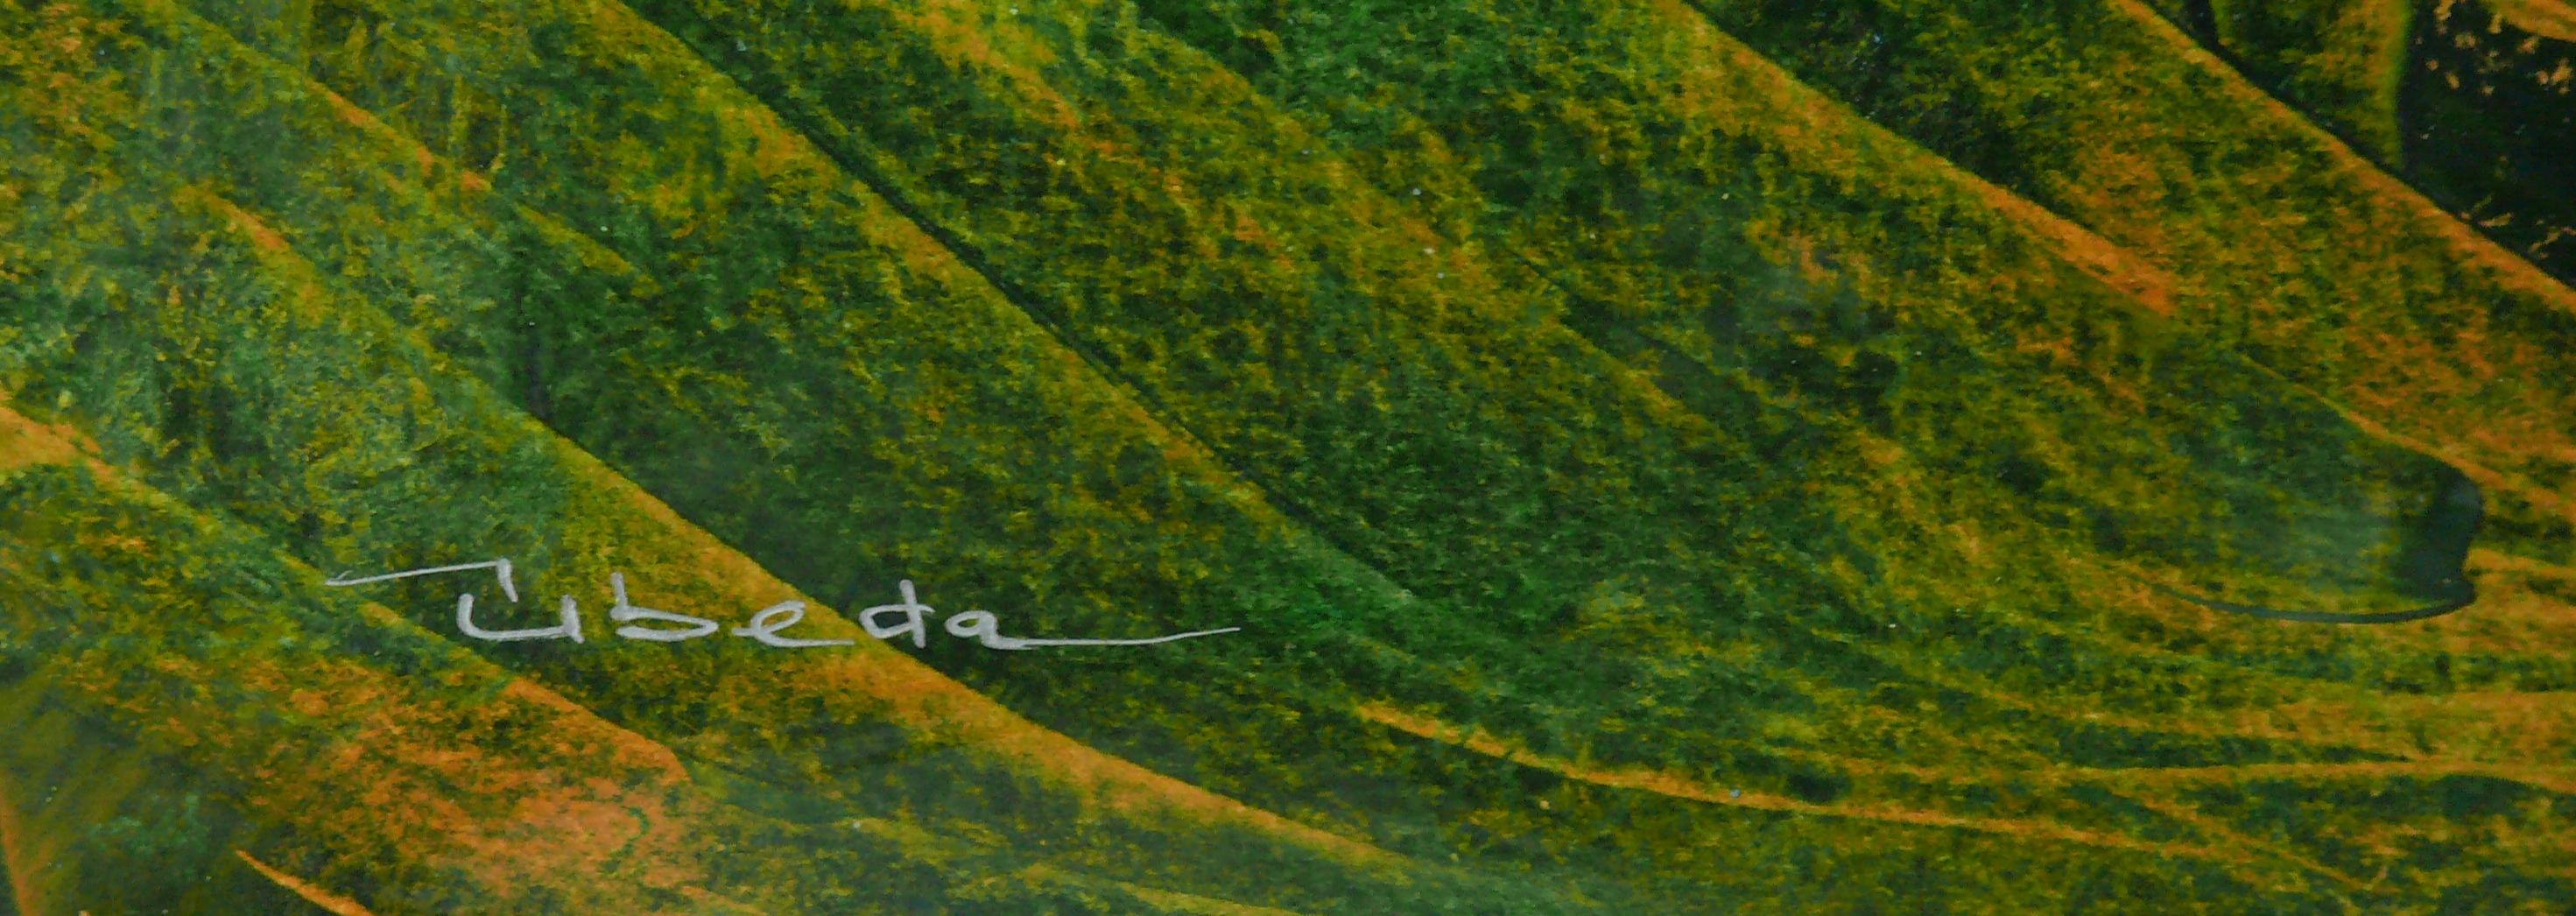 Under The Sea Series Nº 1. Úbeda Oil on Paper Fantasy green and orange Landscape - Painting by Ángel Luis Úbeda